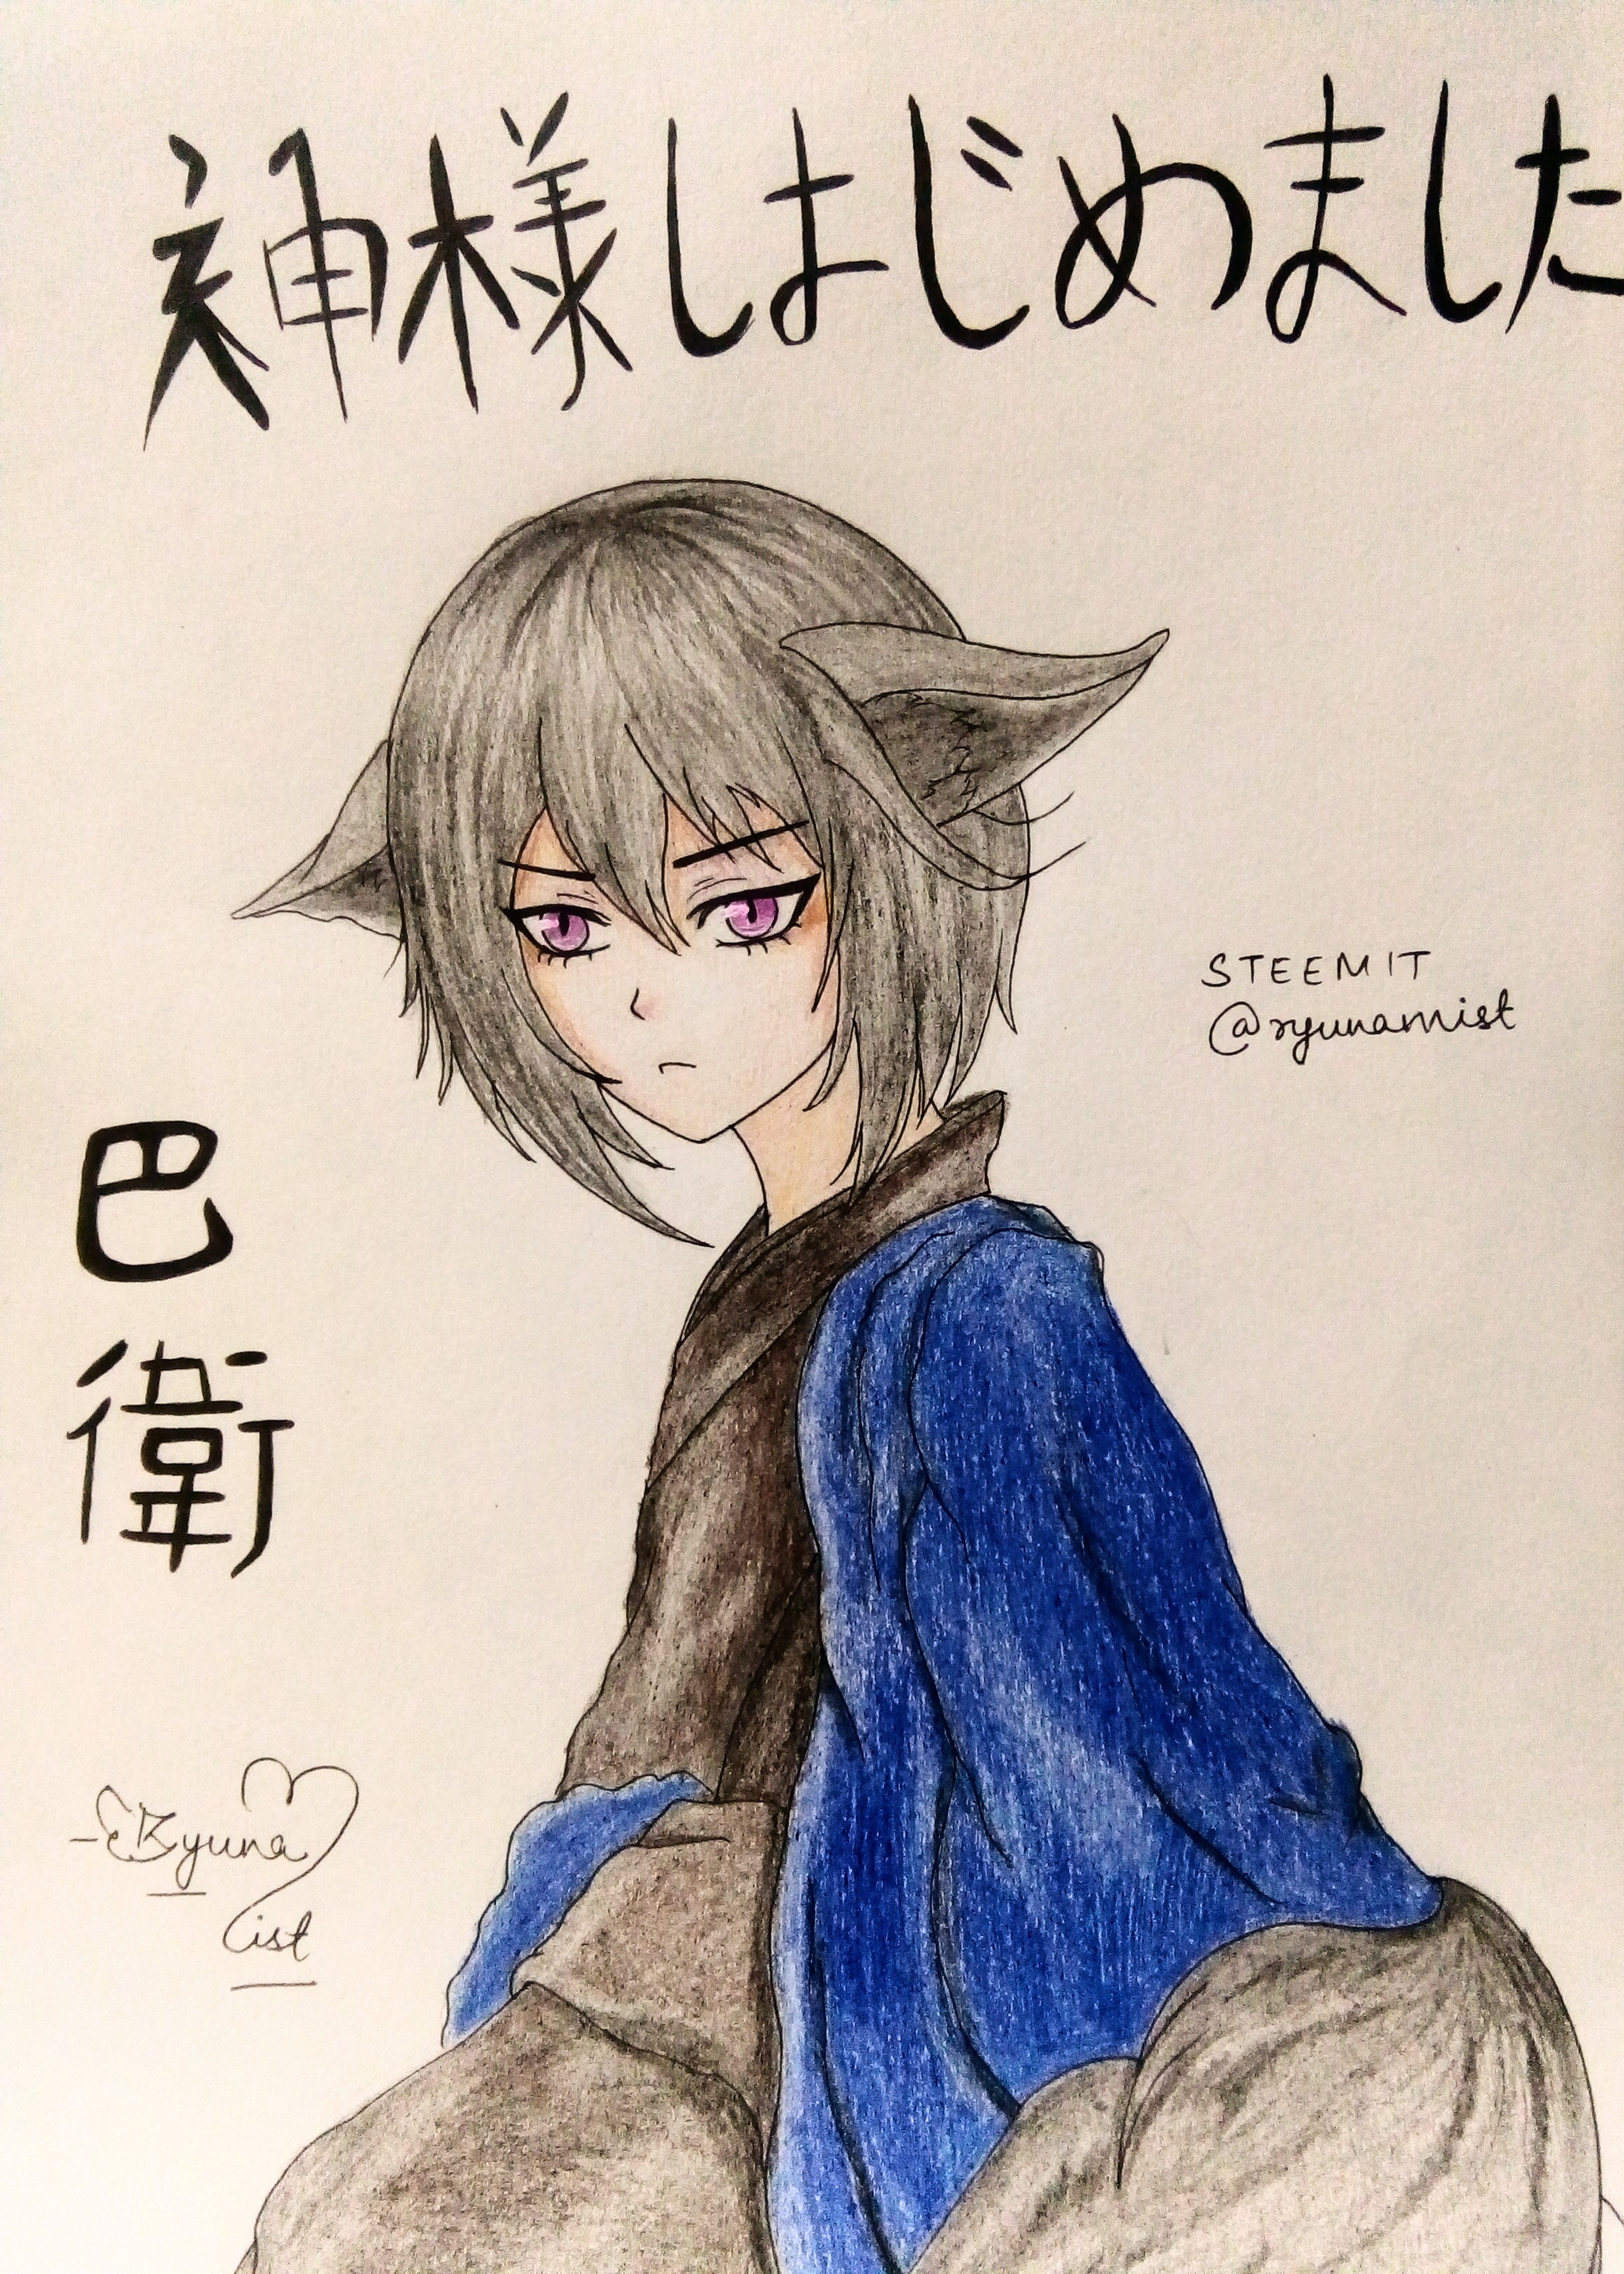 Tomoe - Kamisama hajimemashita - Alis96 - Drawings & Illustration,  Entertainment, Television, Anime - ArtPal